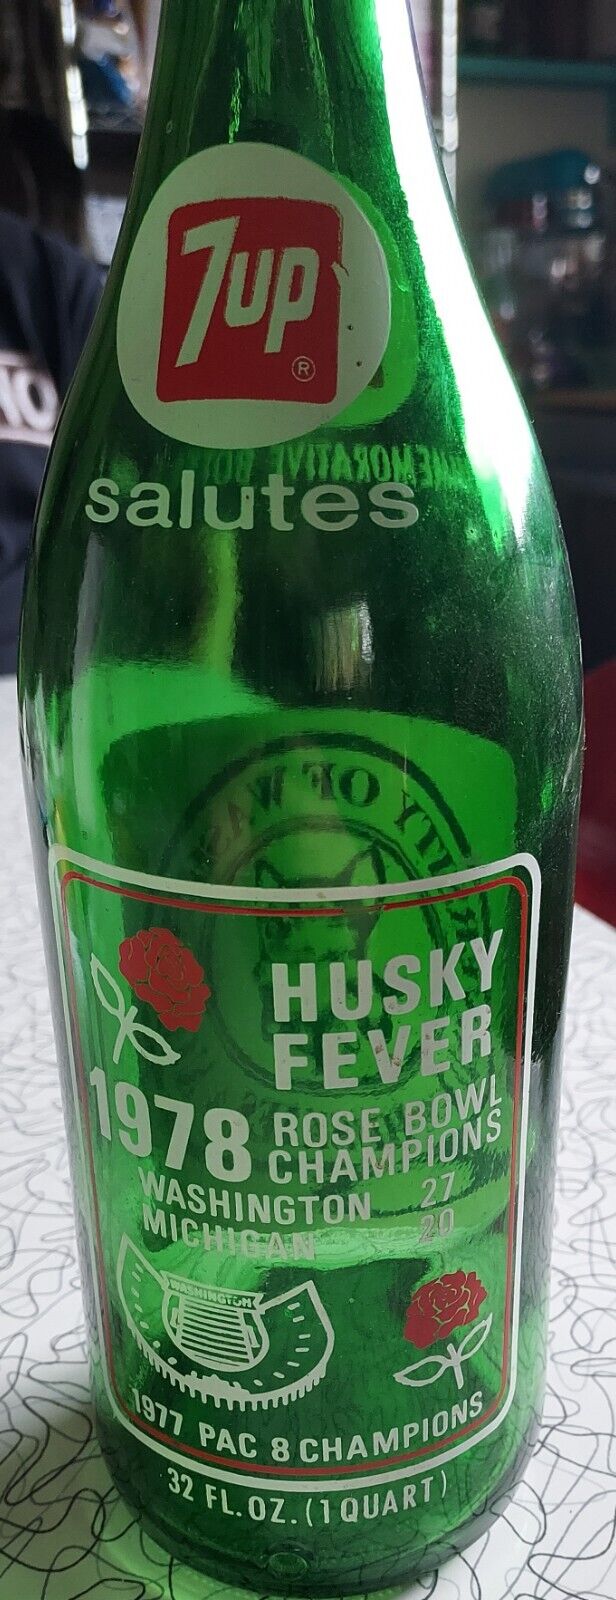 Washington Husky Fever - 1978 Rose Bowl Champions 7-Up Bottle 32 Fl Oz